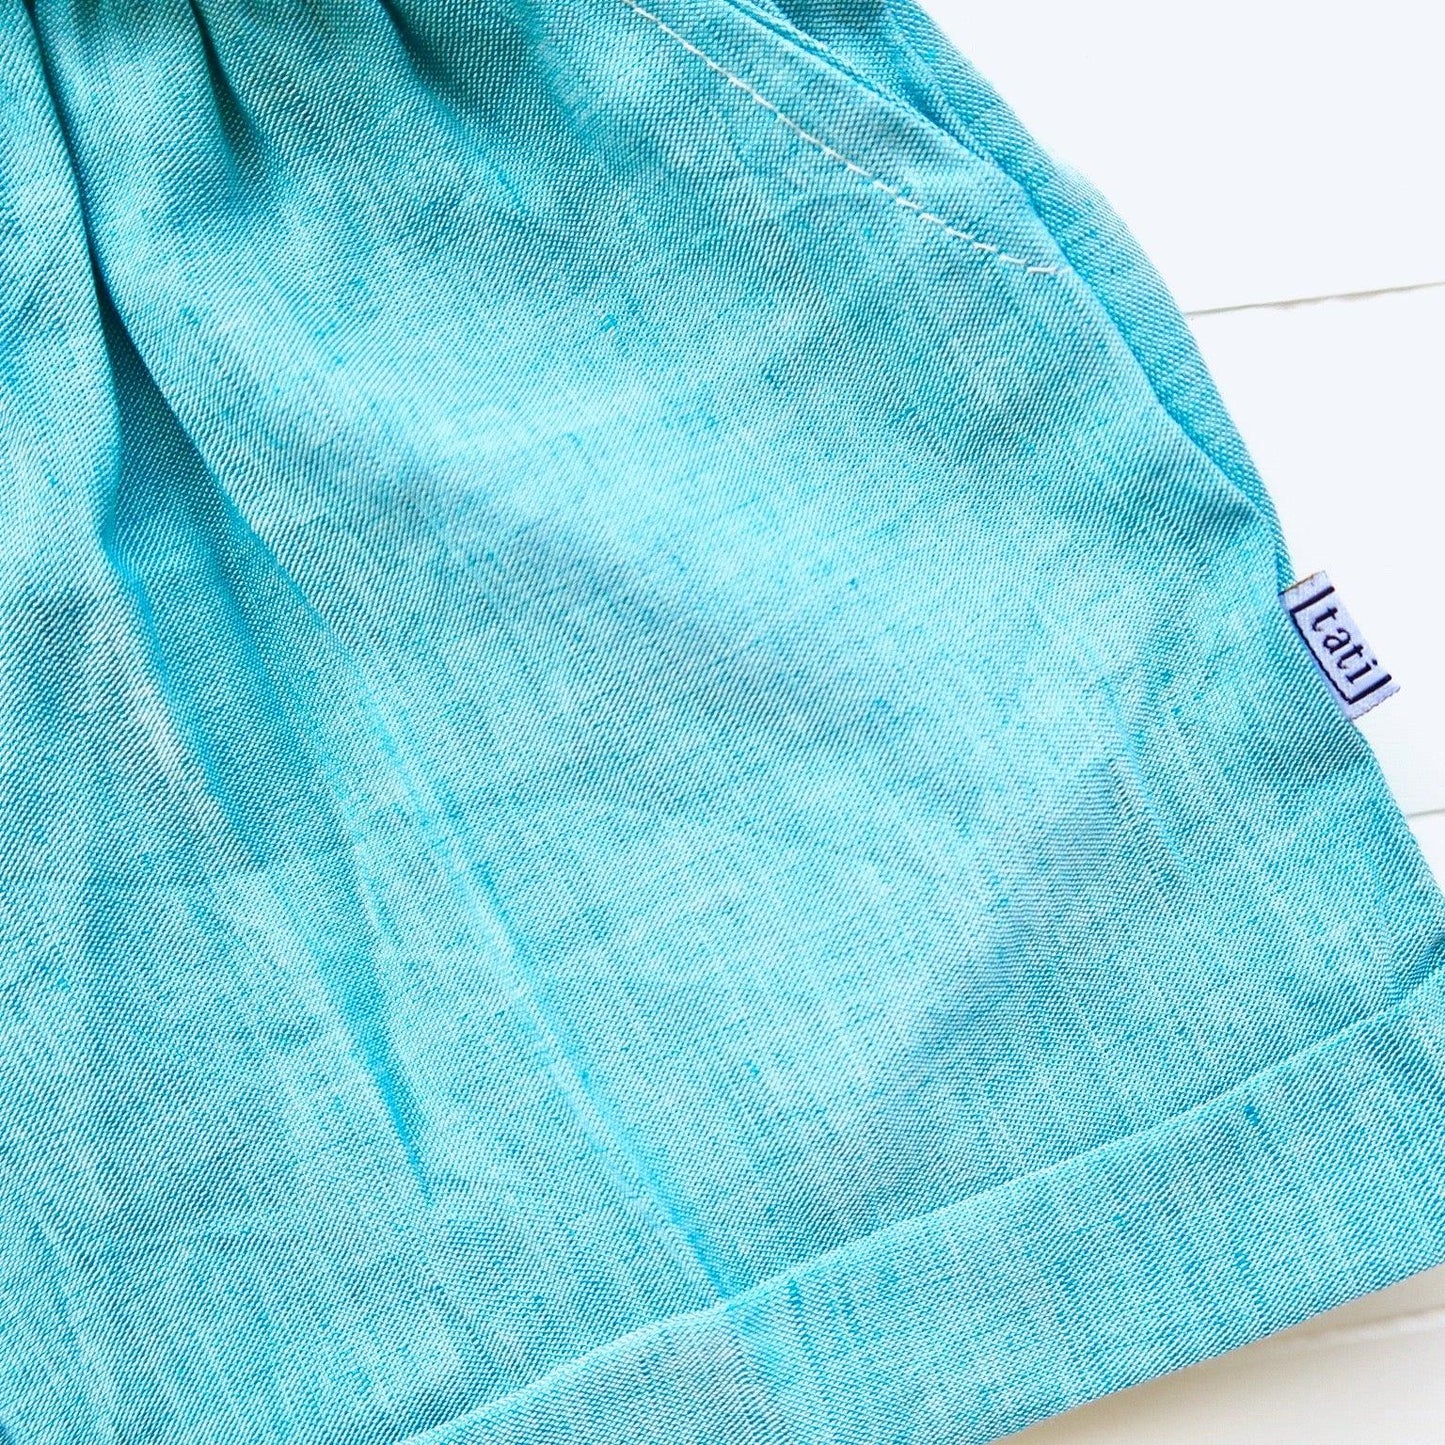 Sundrop Shorts in Bluegreen Linen - Lil' Tati